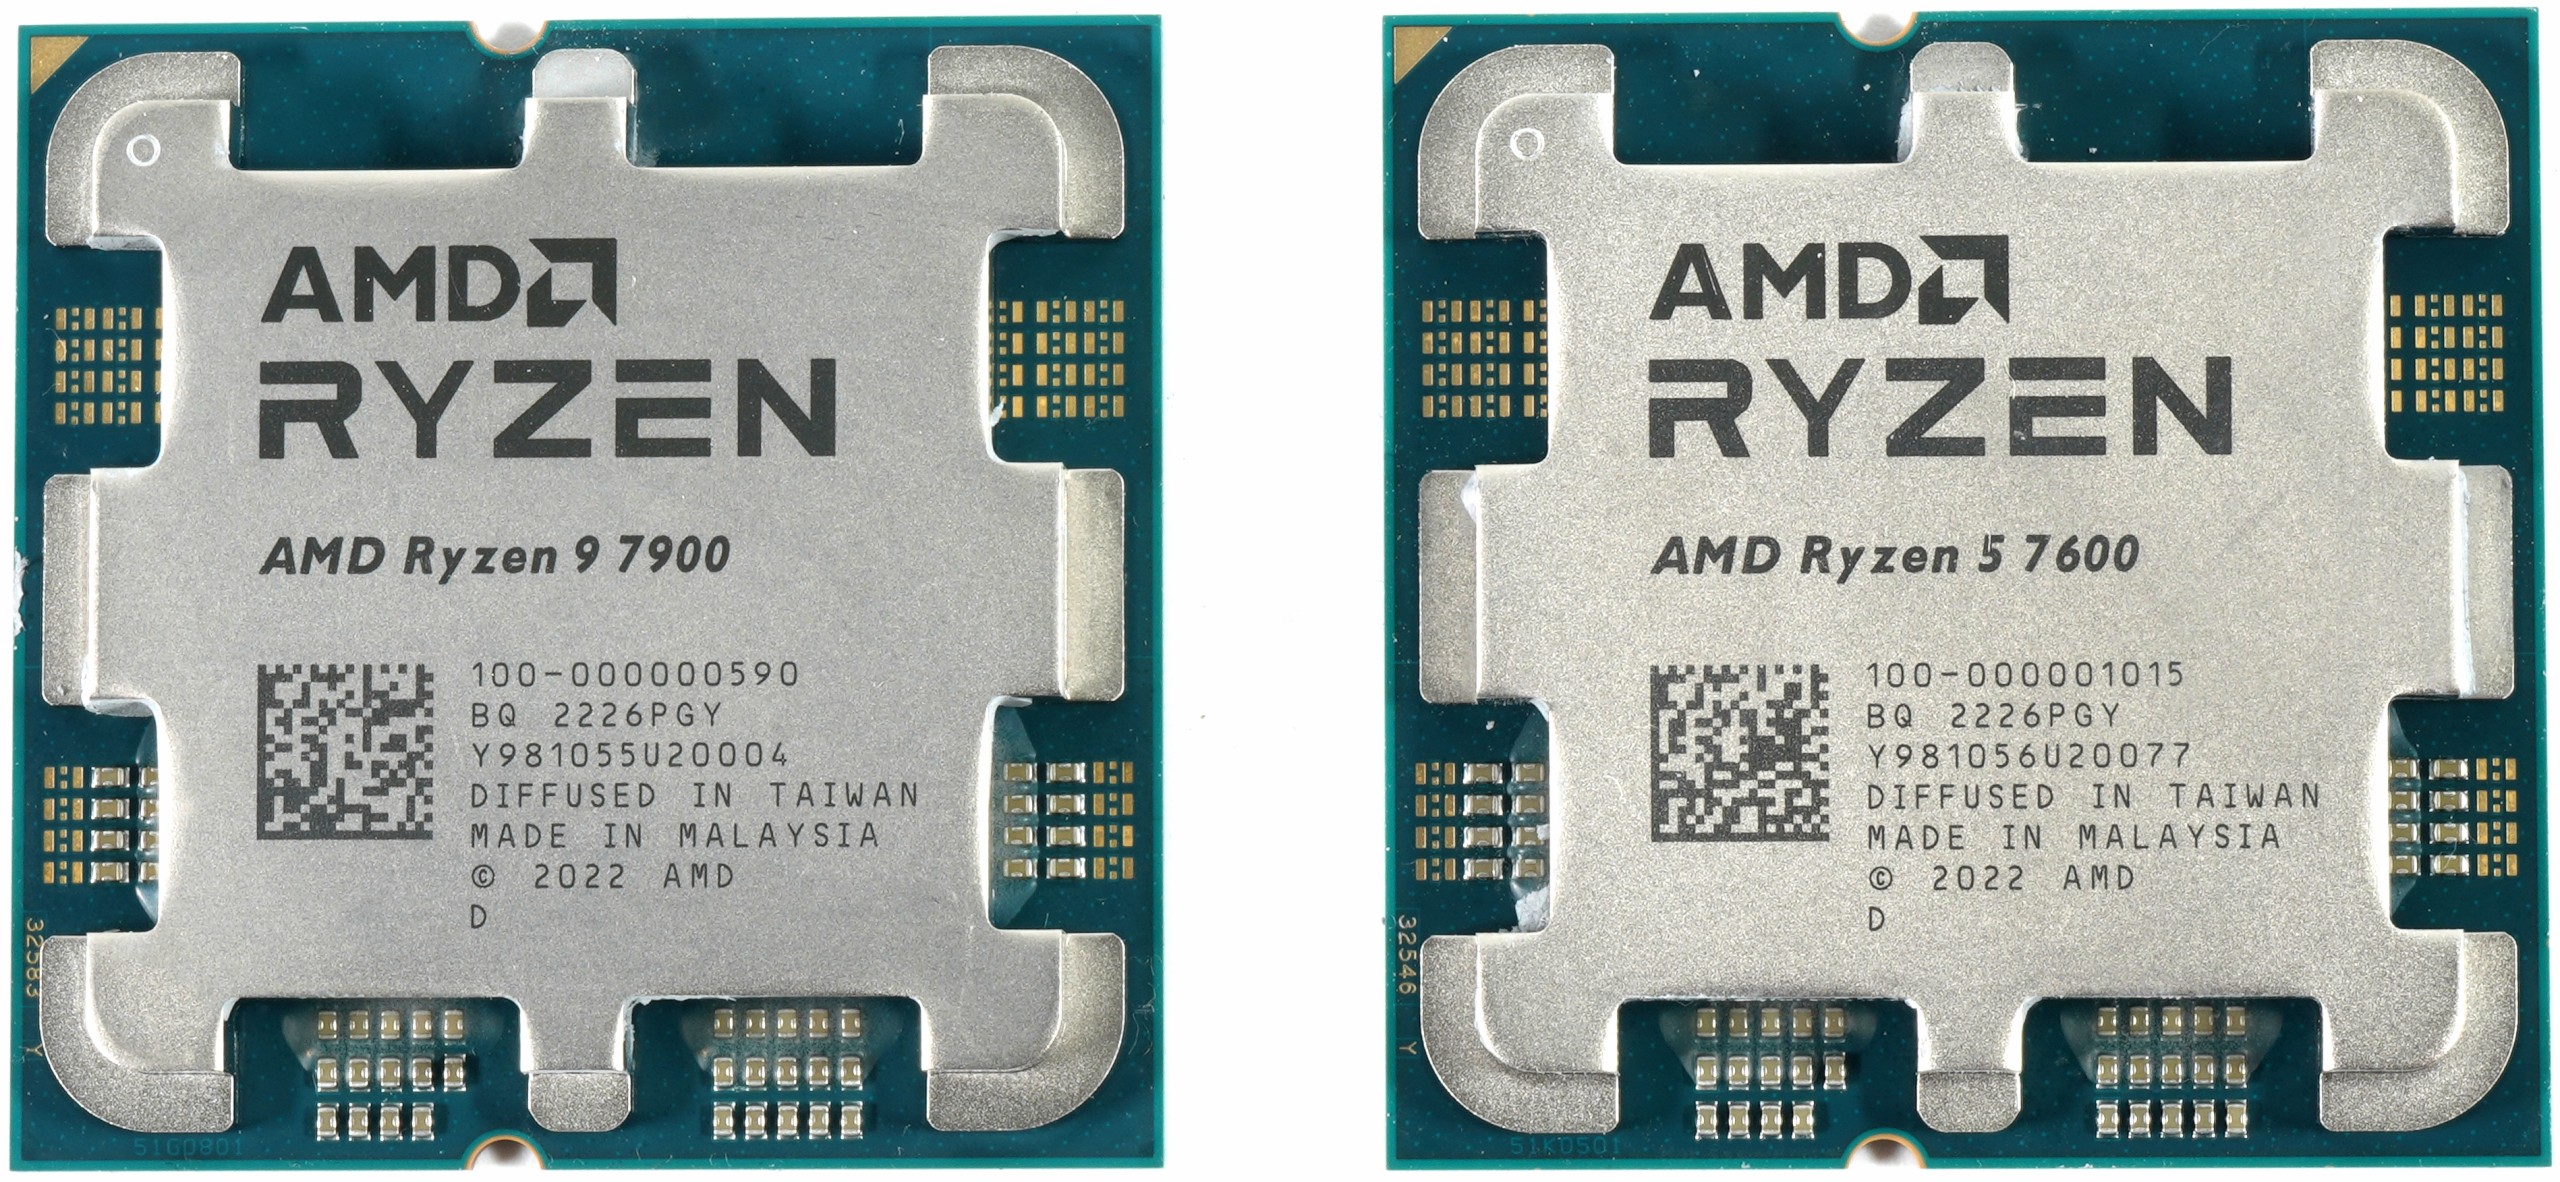 AMD Ryzen 9 7900, Ryzen 7 7700, and Ryzen 5 7600 announced